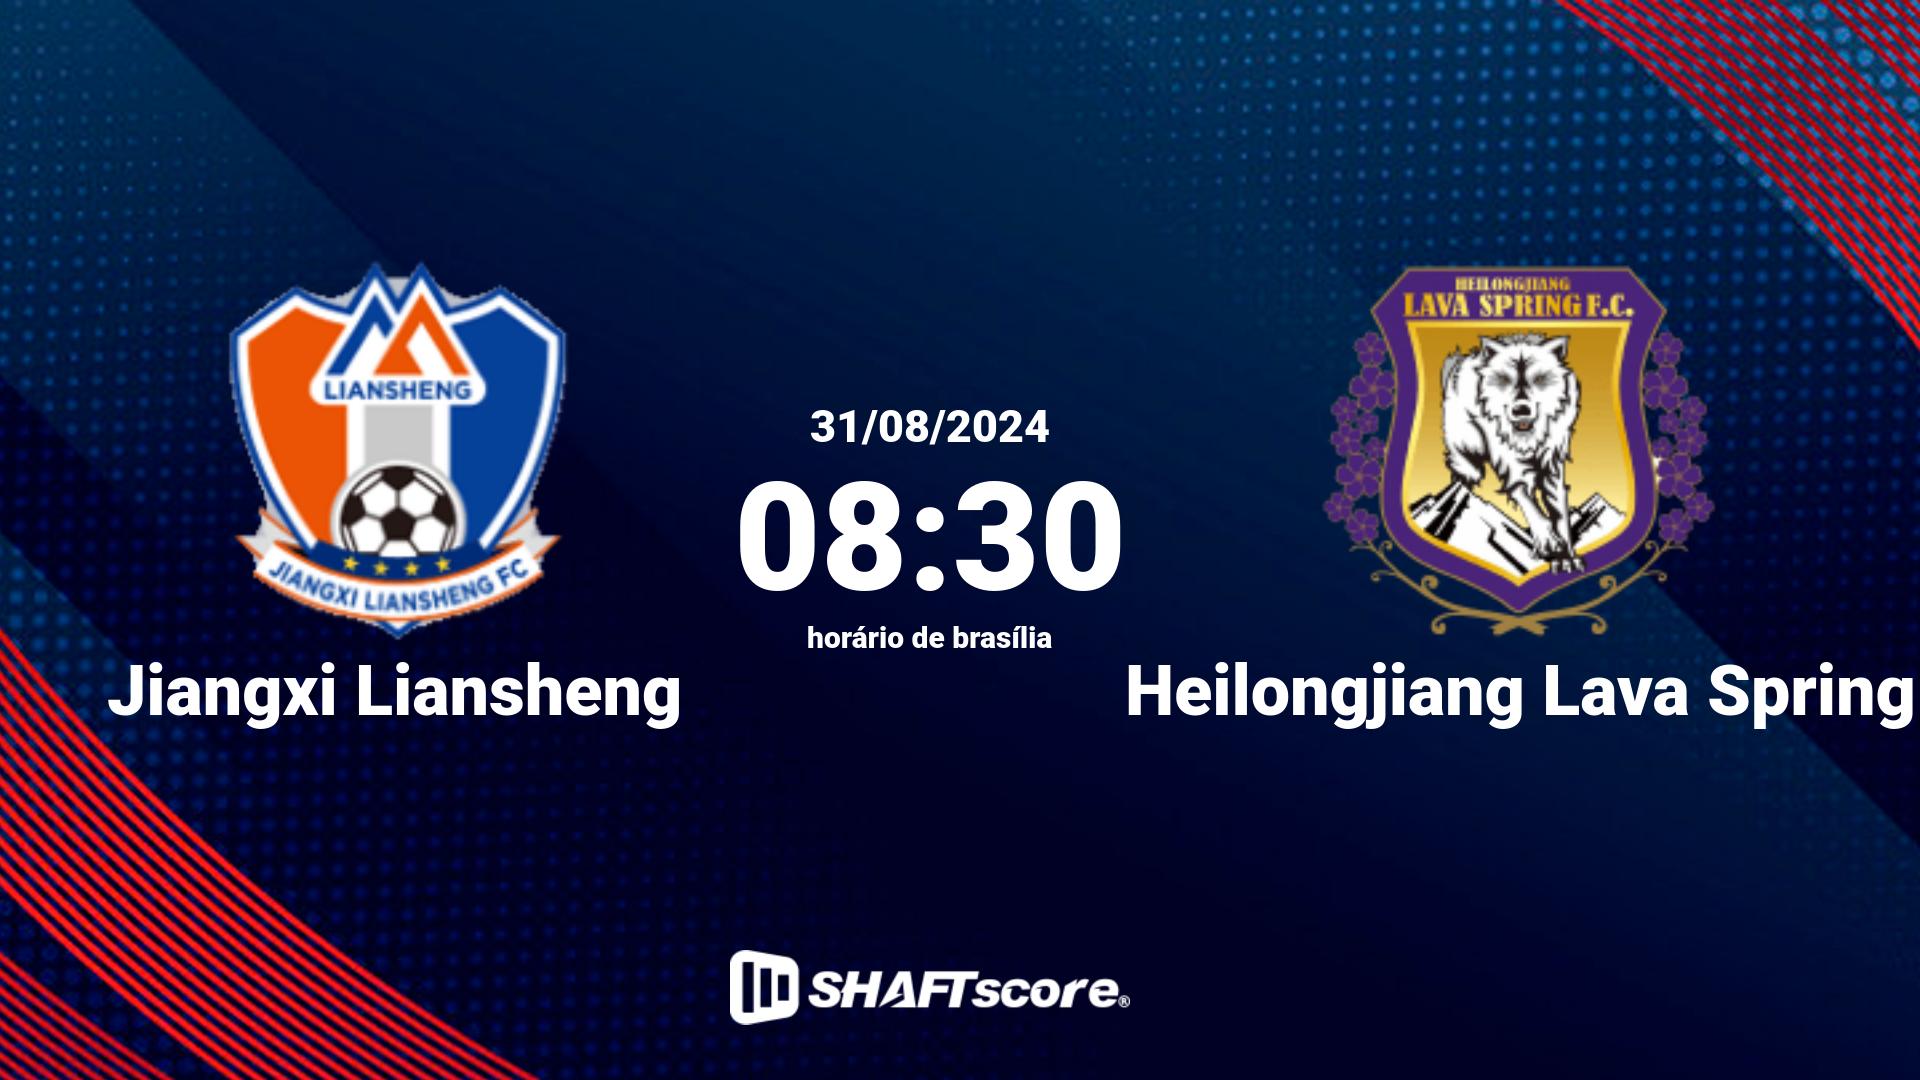 Estatísticas do jogo Jiangxi Liansheng vs Heilongjiang Lava Spring 31.08 08:30